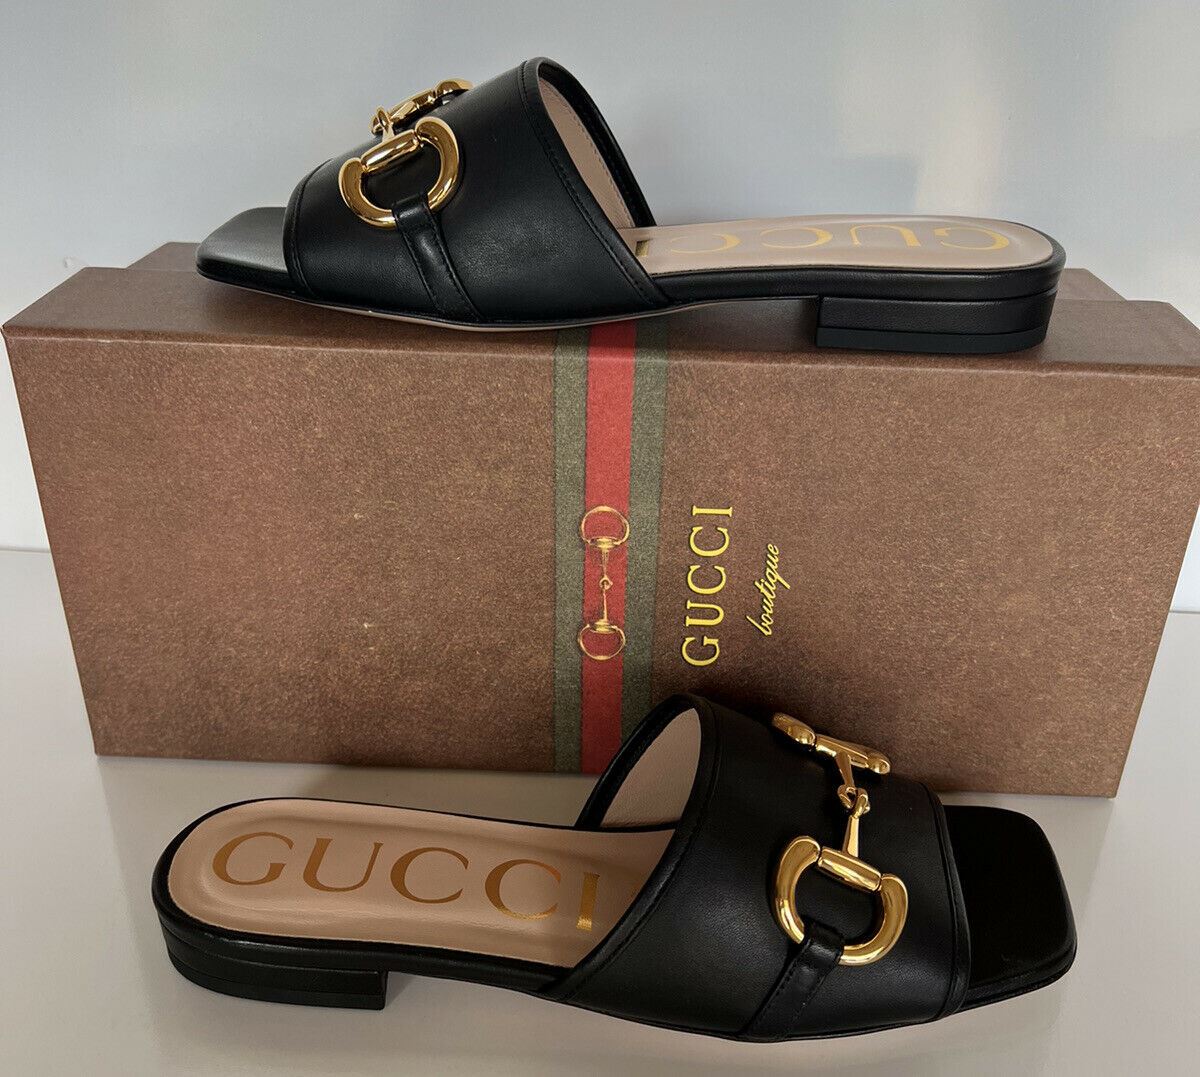 NIB Gucci Women's Horsebit Black Sandal 6.5 US (36.5 Euro) Made in Italy 623111